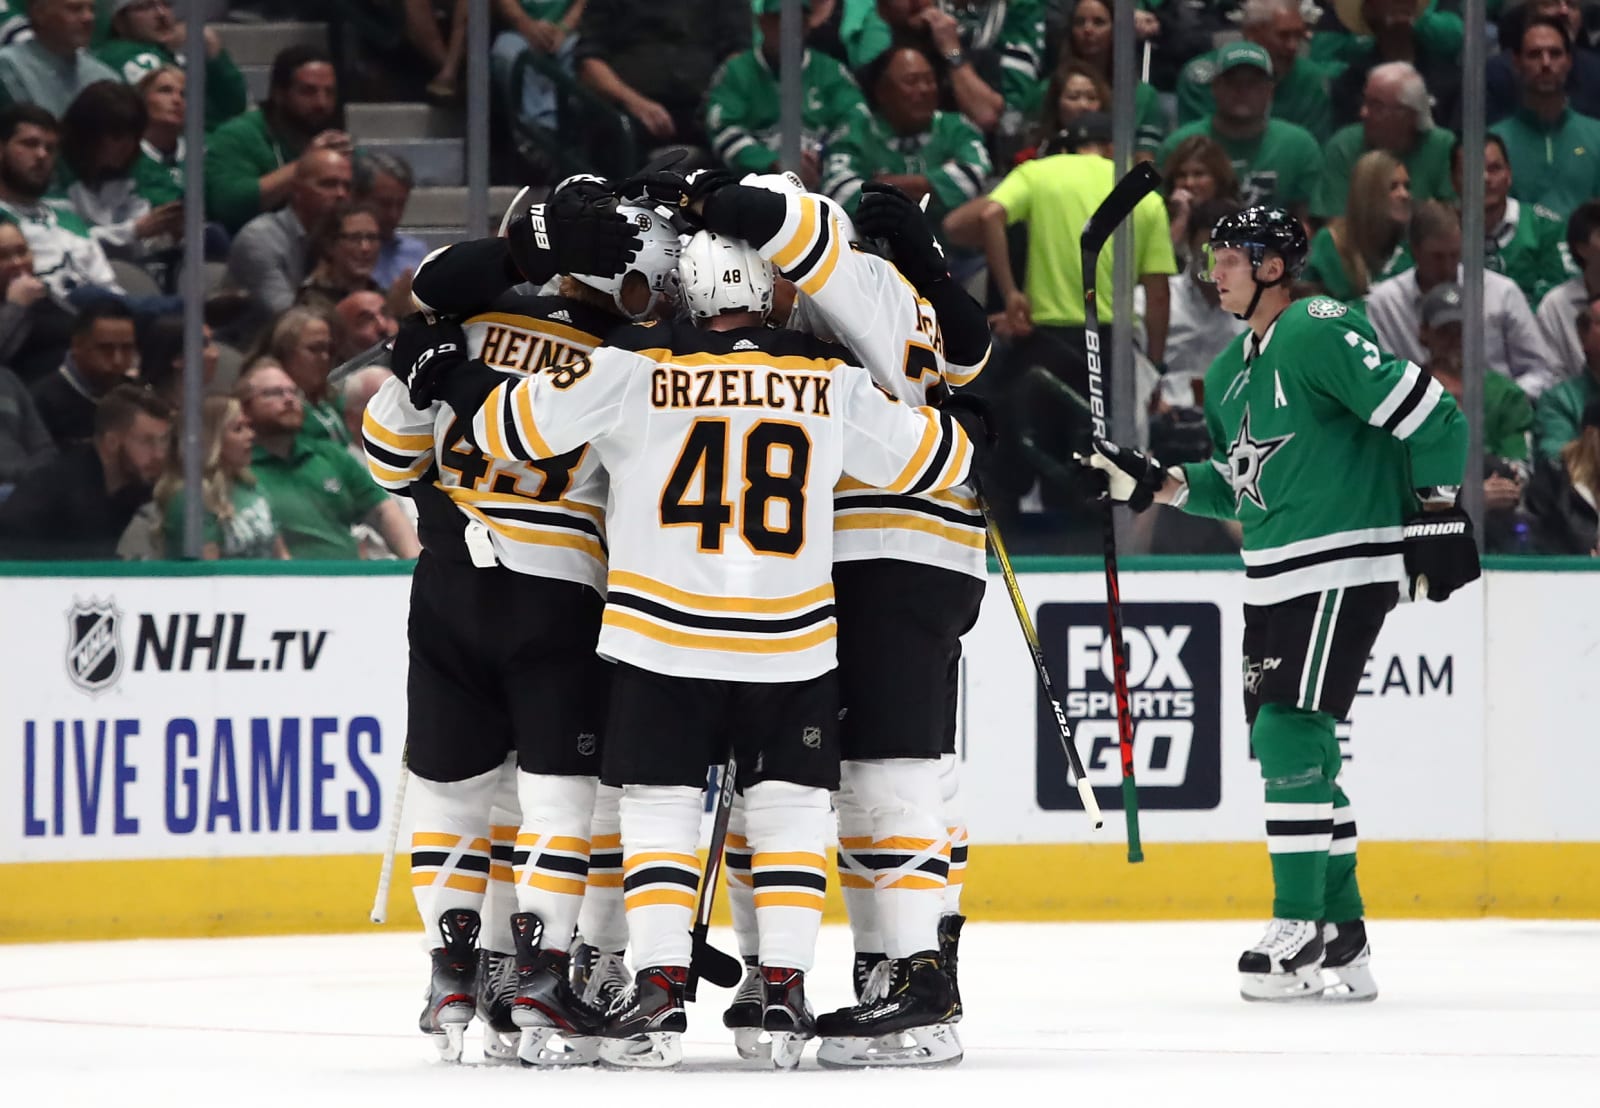 Boston Bruins 3 takeaways from stellar opening night win over Stars